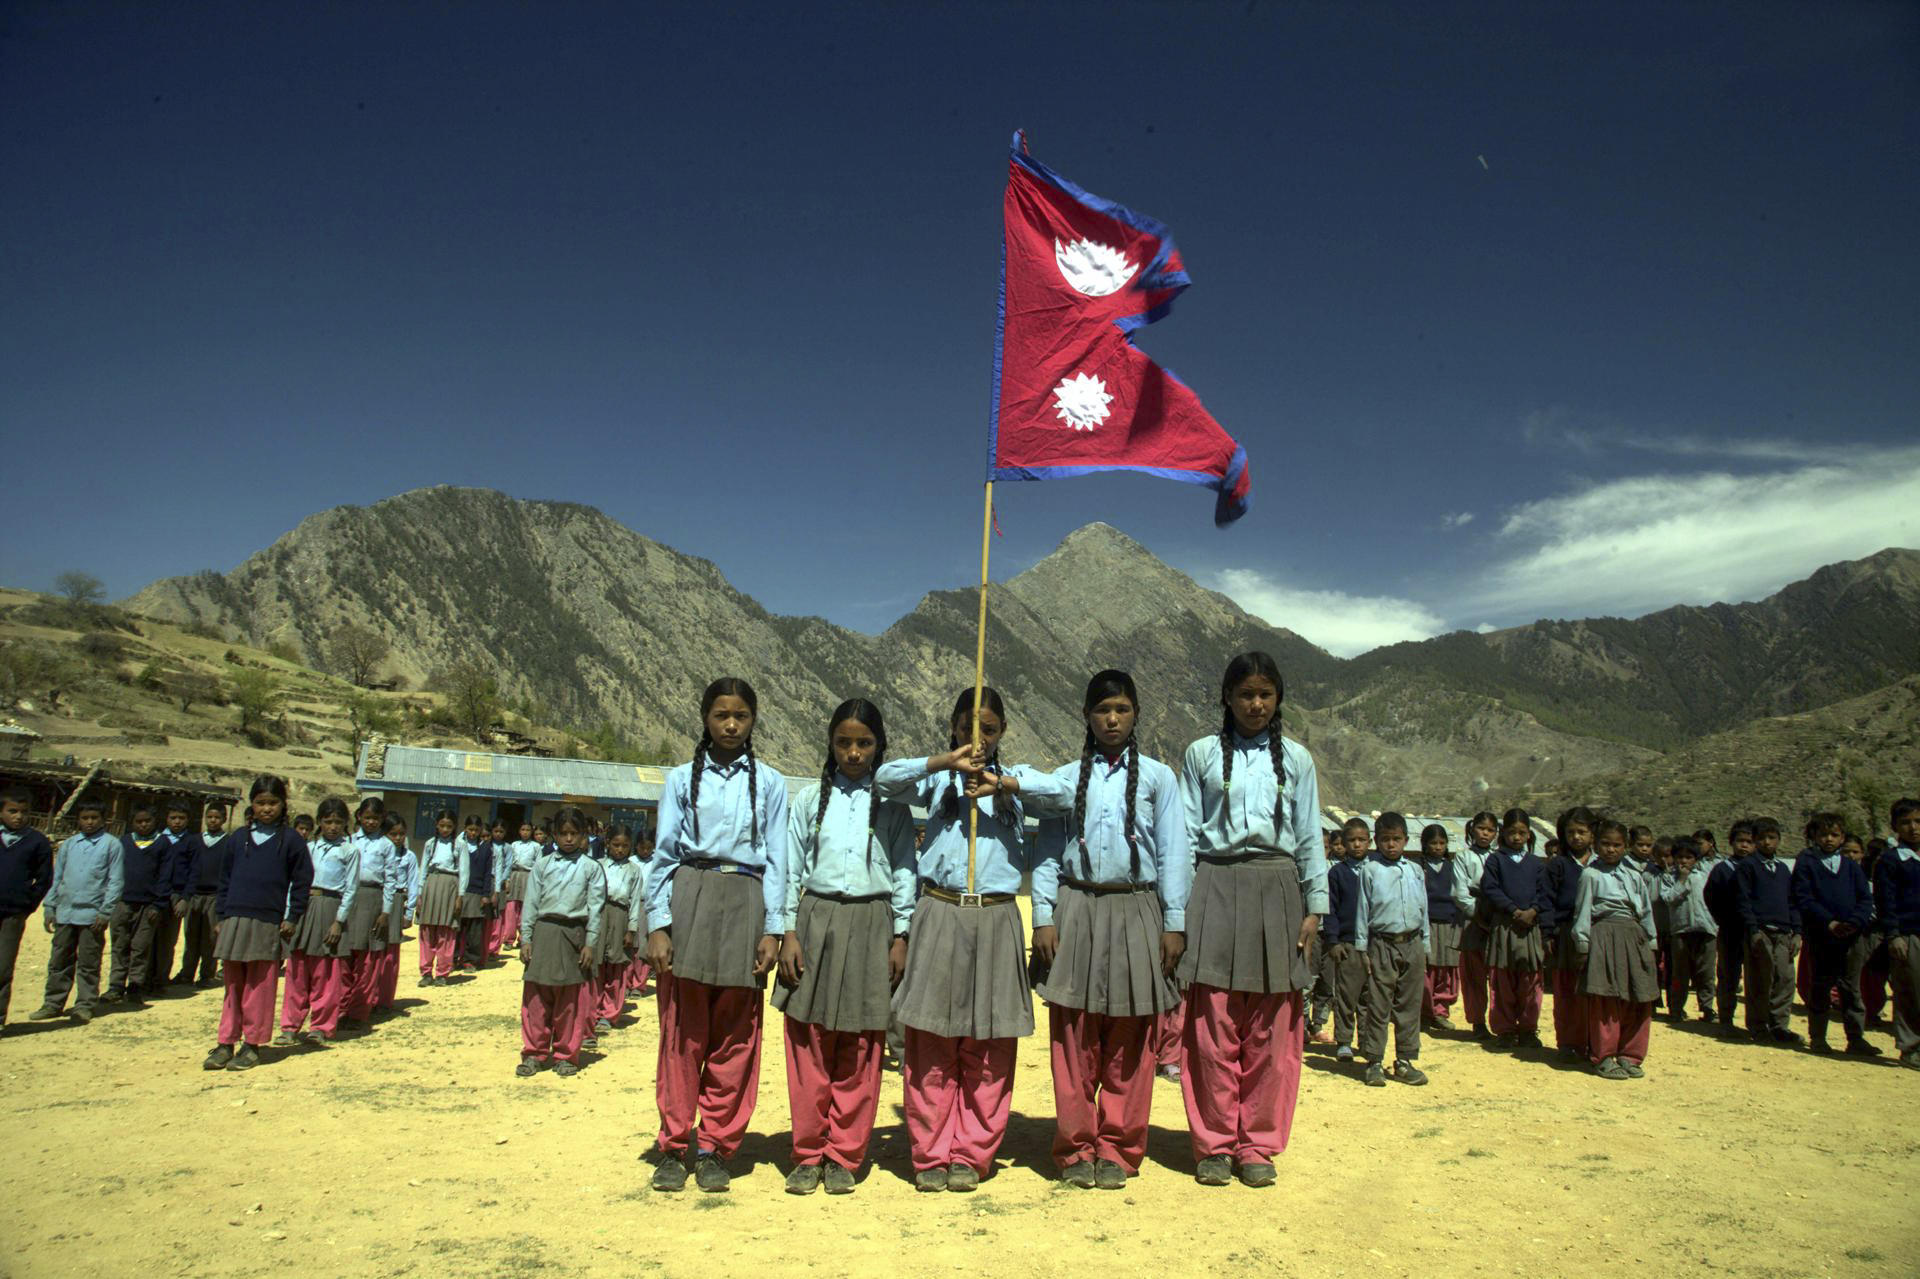 A still from the documentary Sunakali.